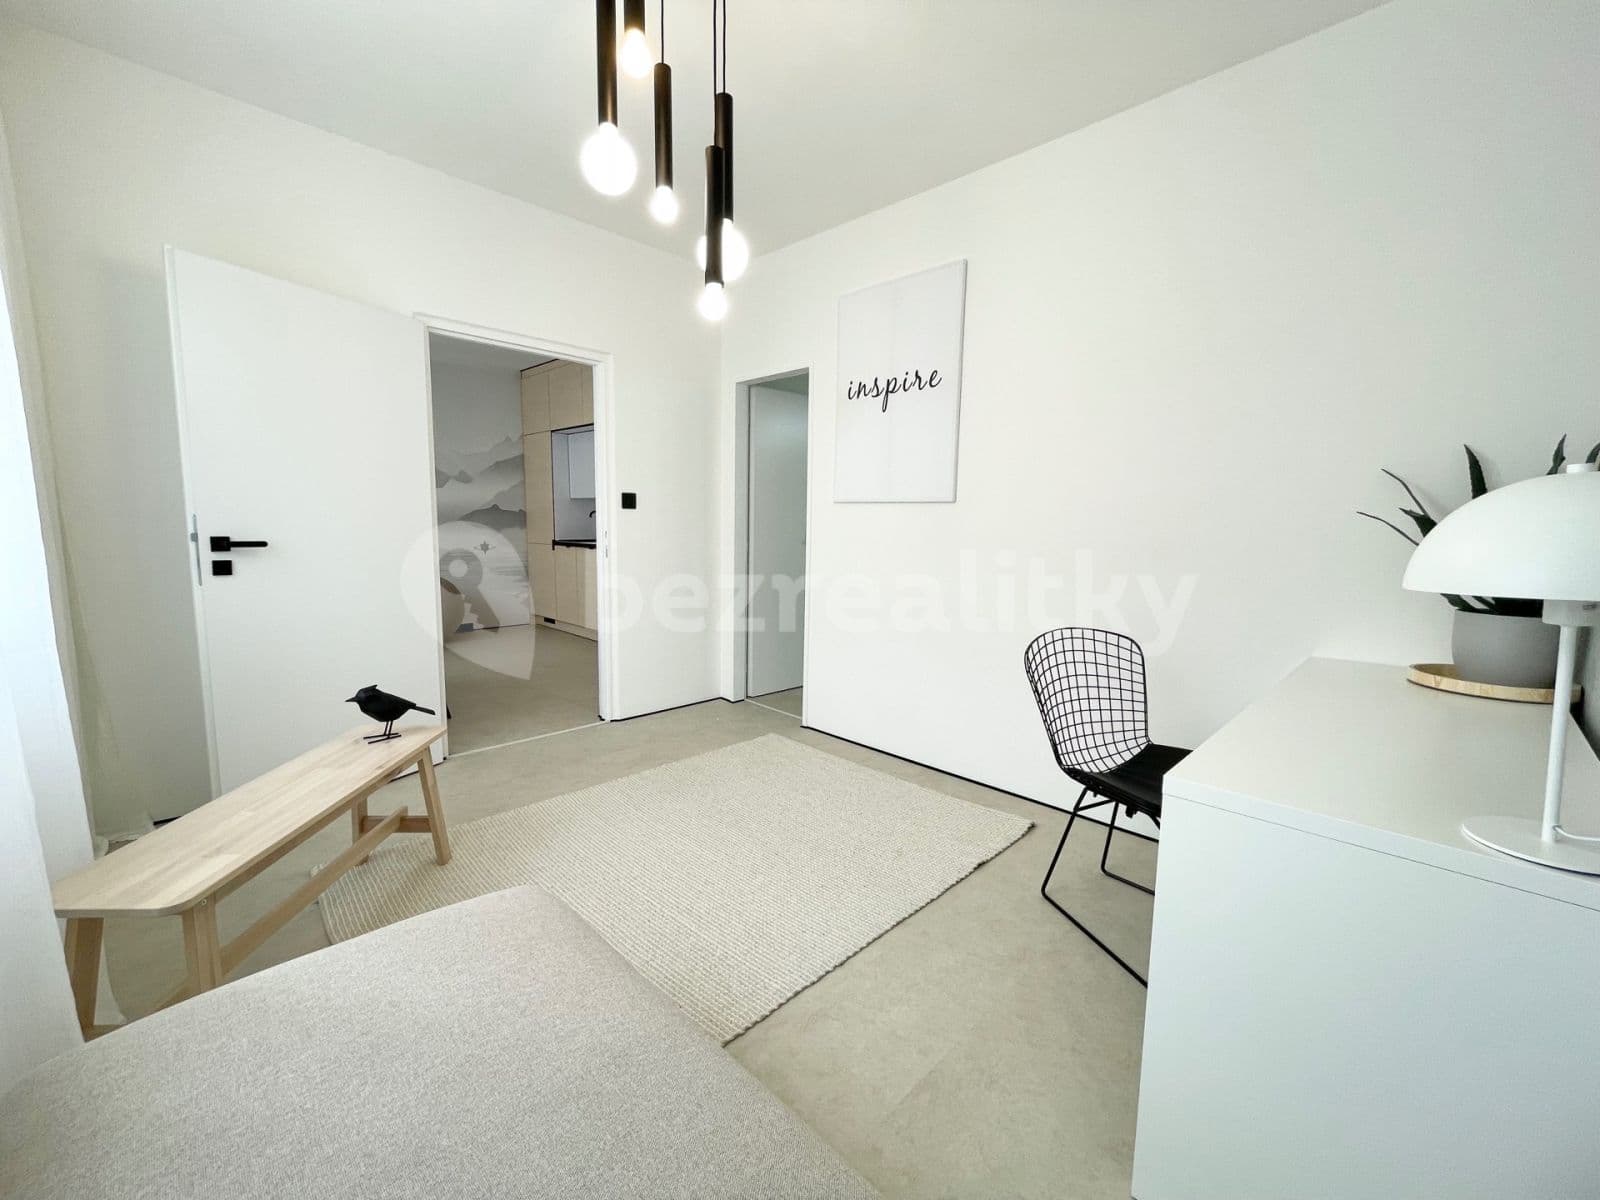 3 bedroom with open-plan kitchen flat for sale, 64 m², Sousedská, Plzeň, Plzeňský Region